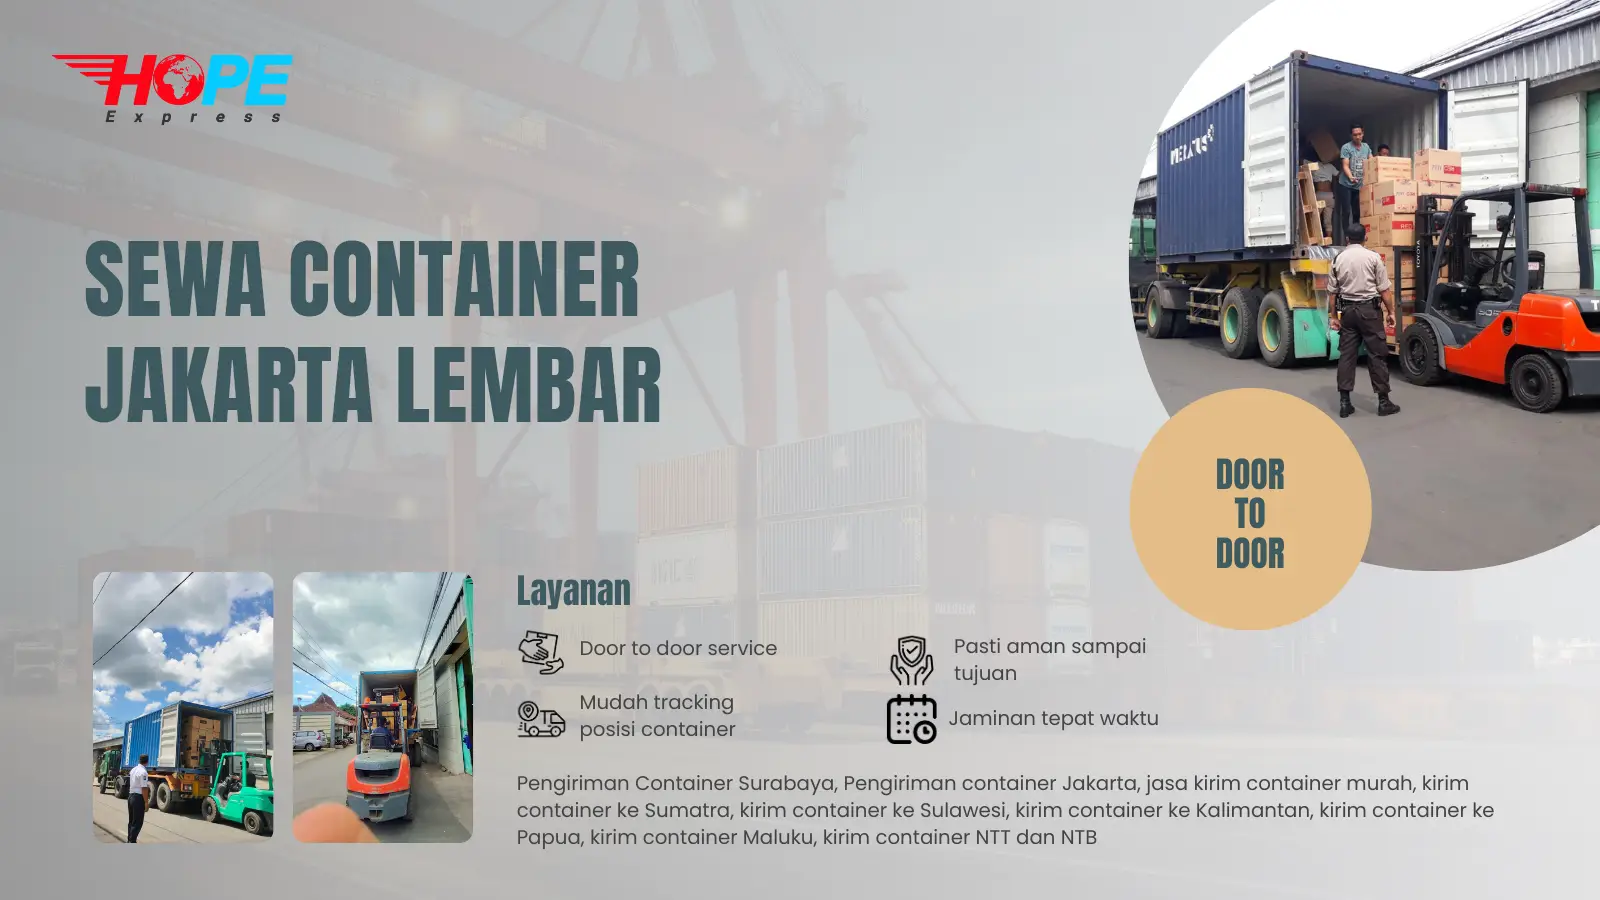 Sewa Container Jakarta Lembar